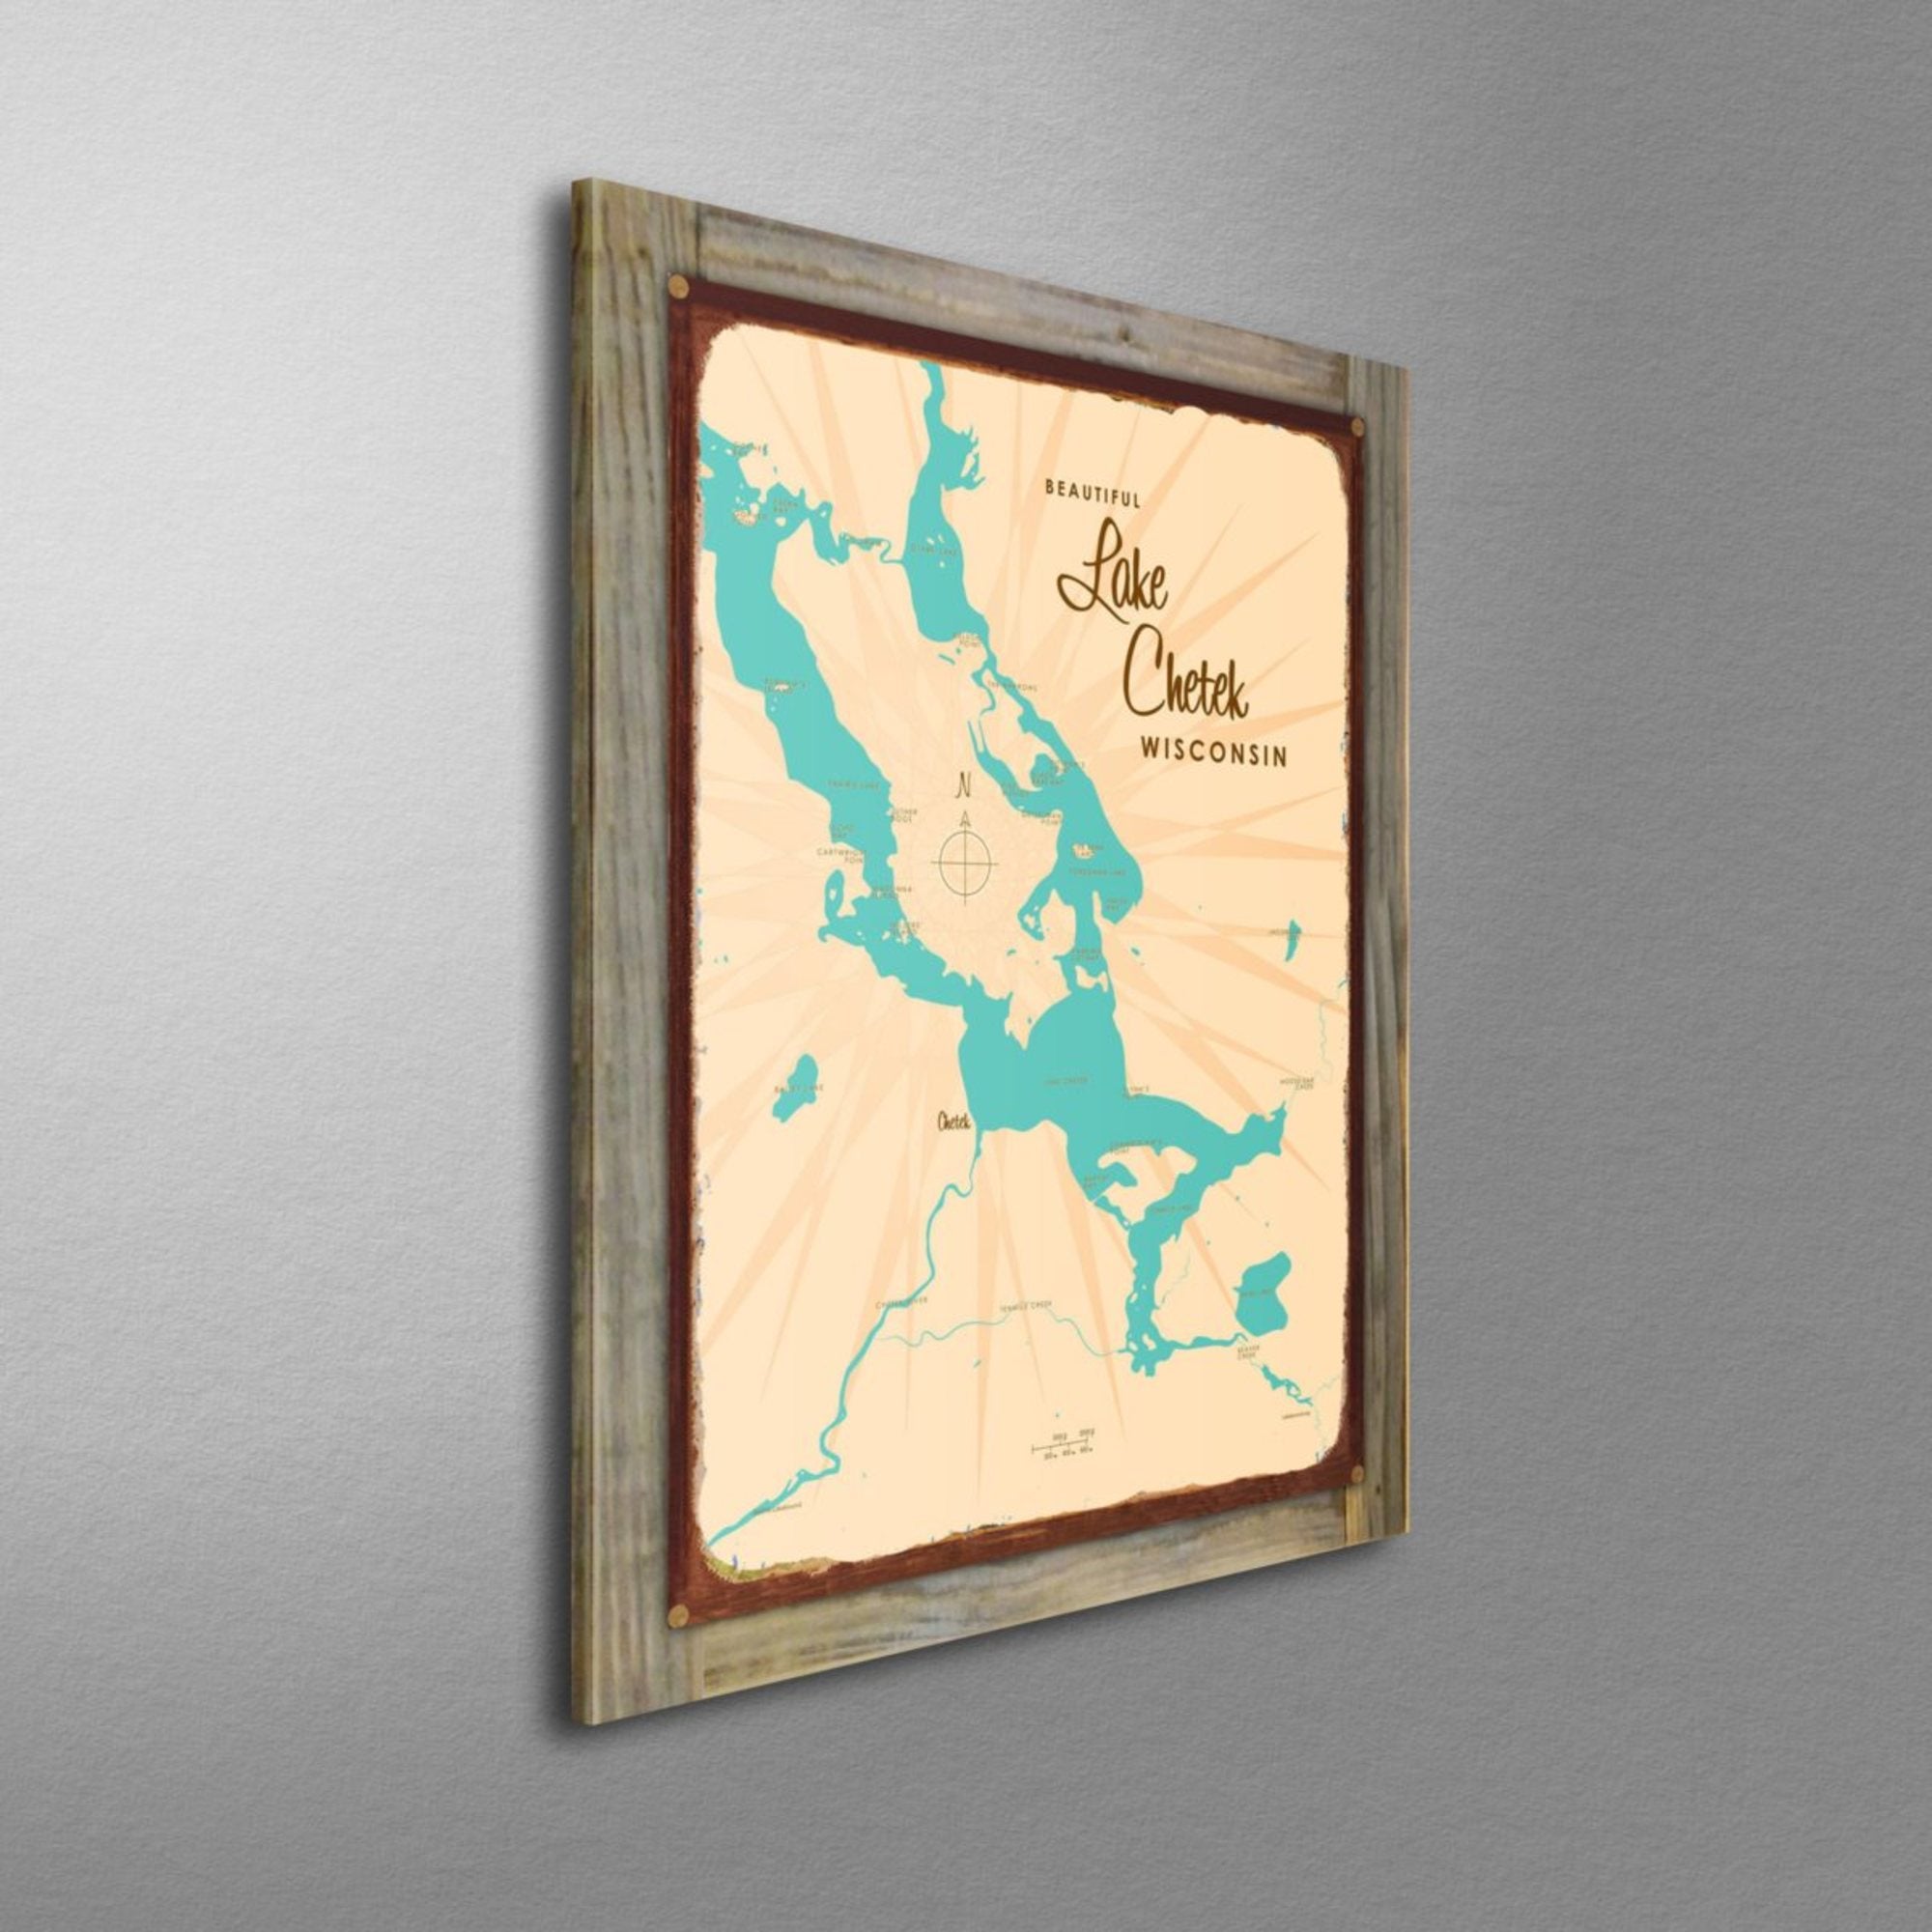 Lake Chetek Wisconsin, Wood-Mounted Rustic Metal Sign Map Art